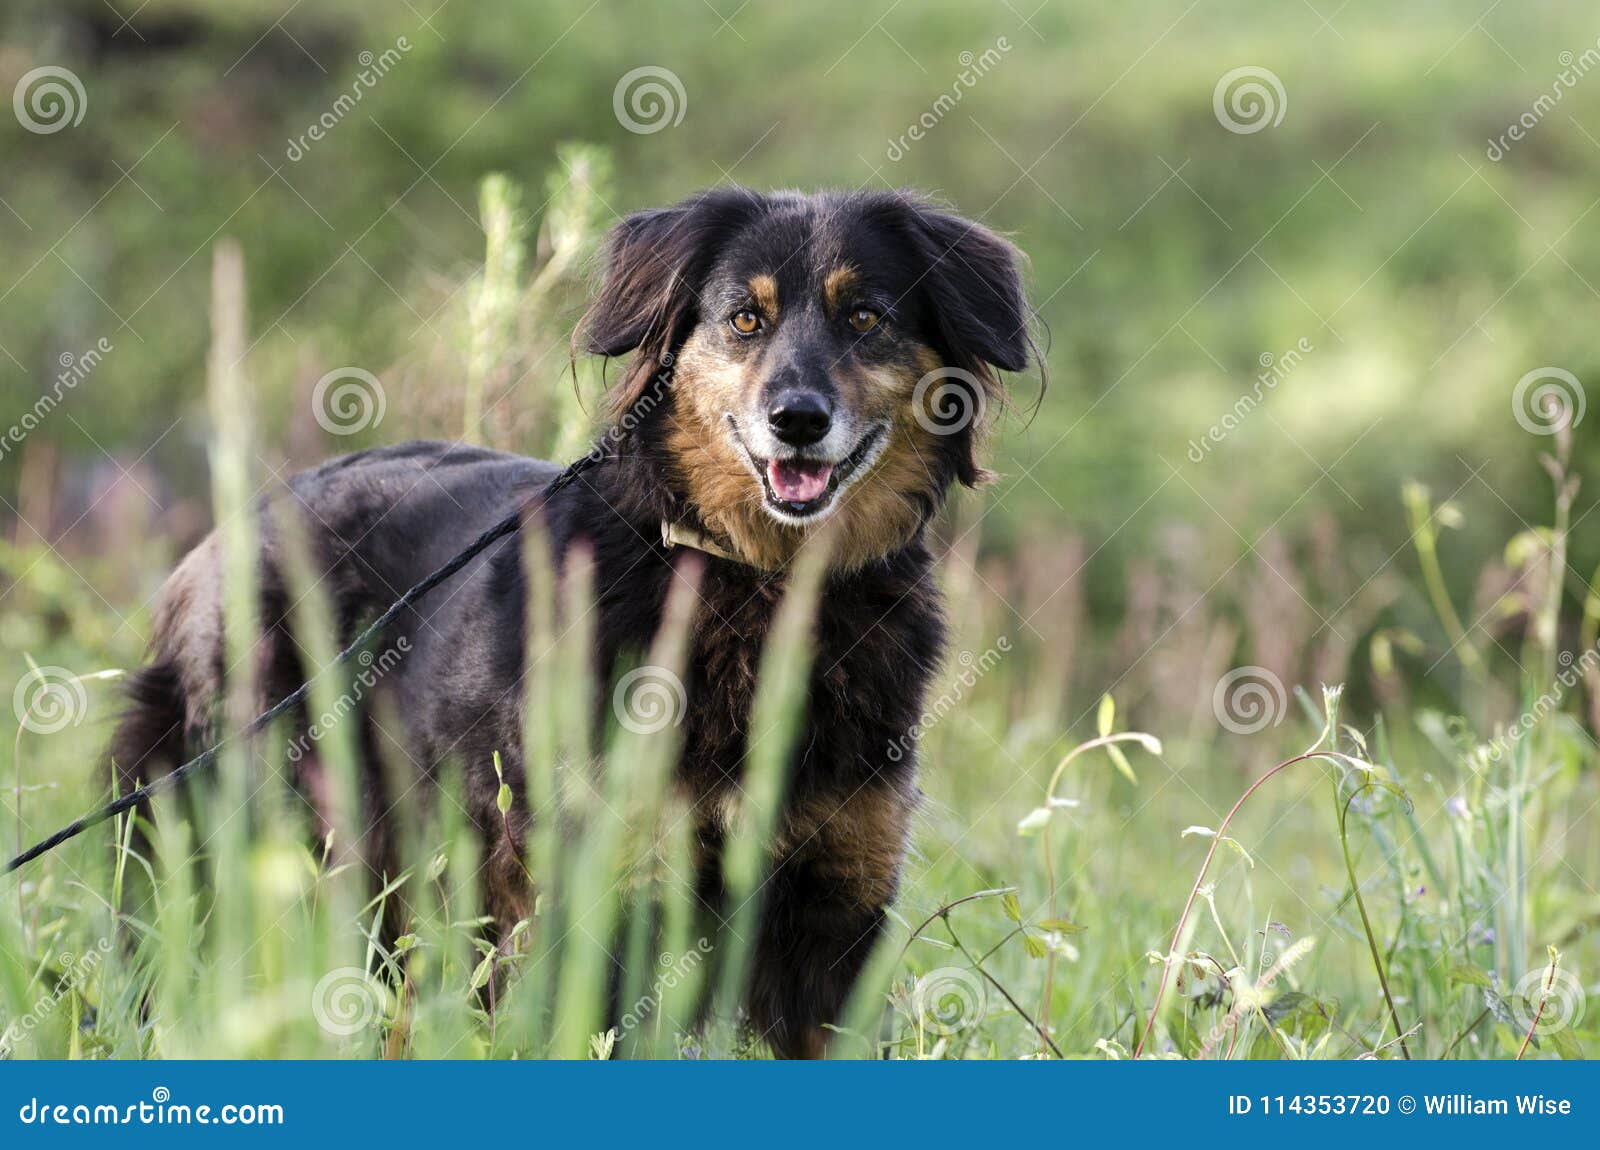 Aussie Setter Mix Dog Pet Rescue Adoption Photography Stock Photo Image Of Control Pound 114353720